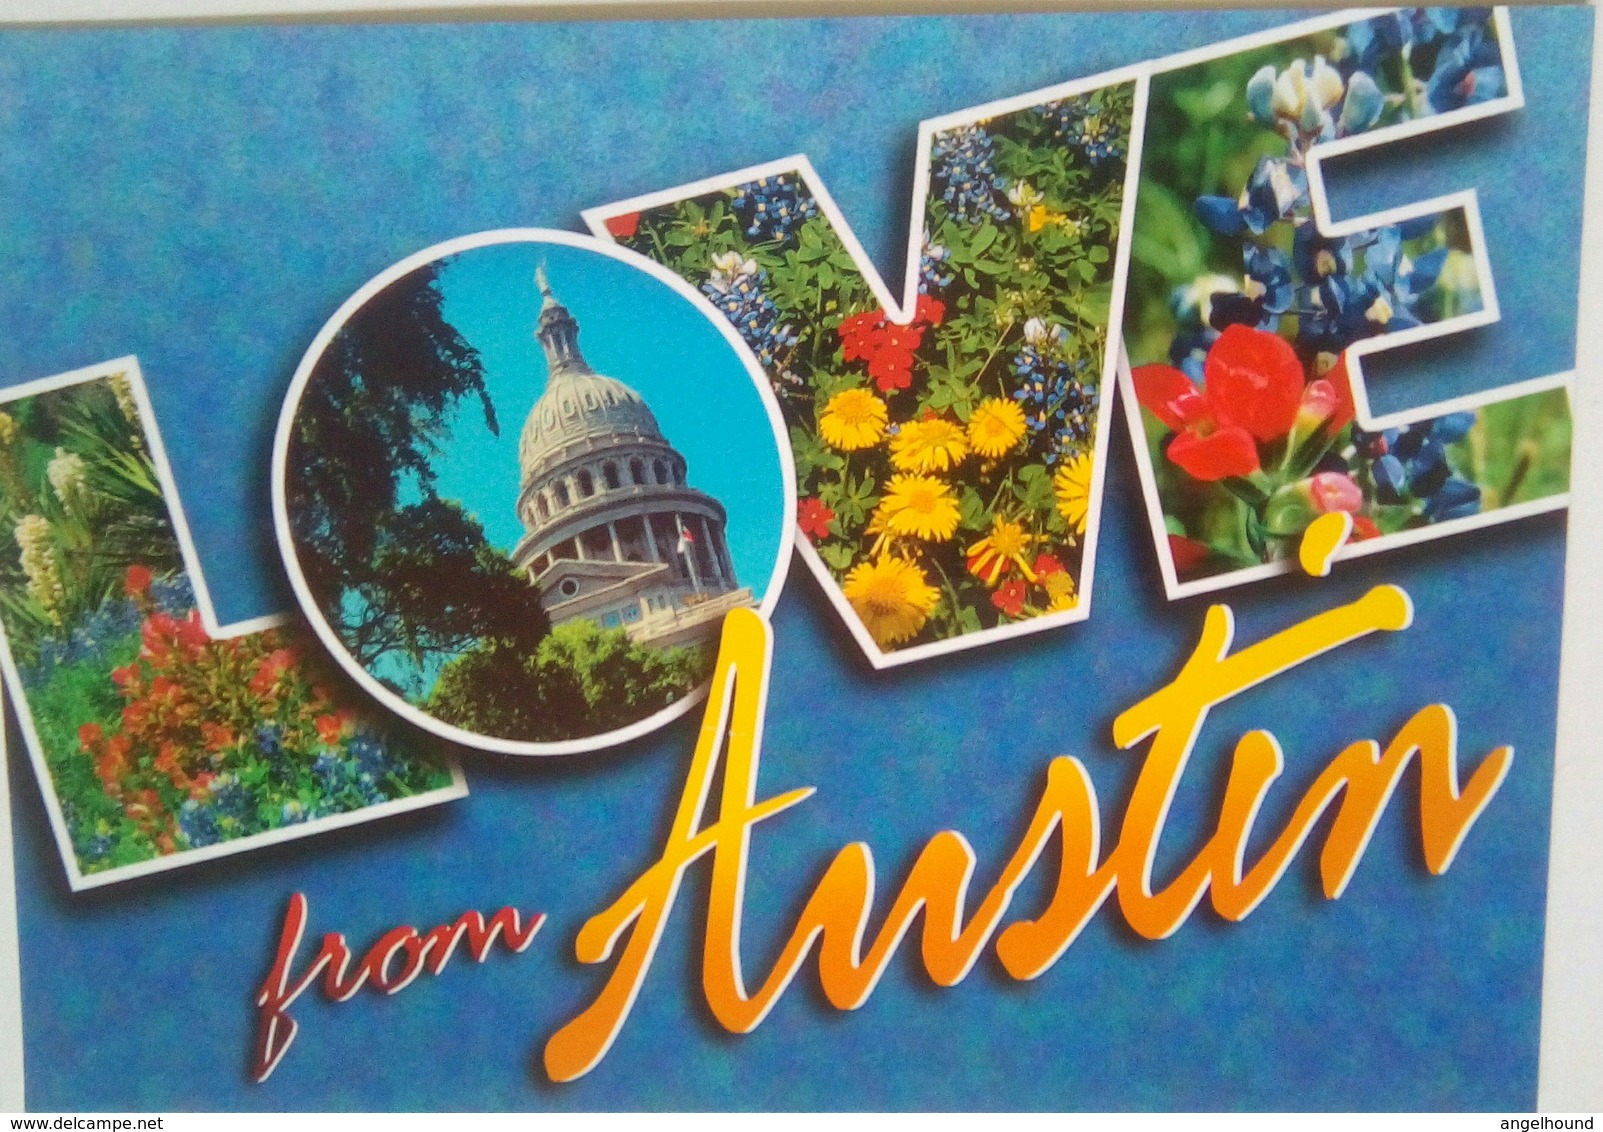 Love From Austin - Austin